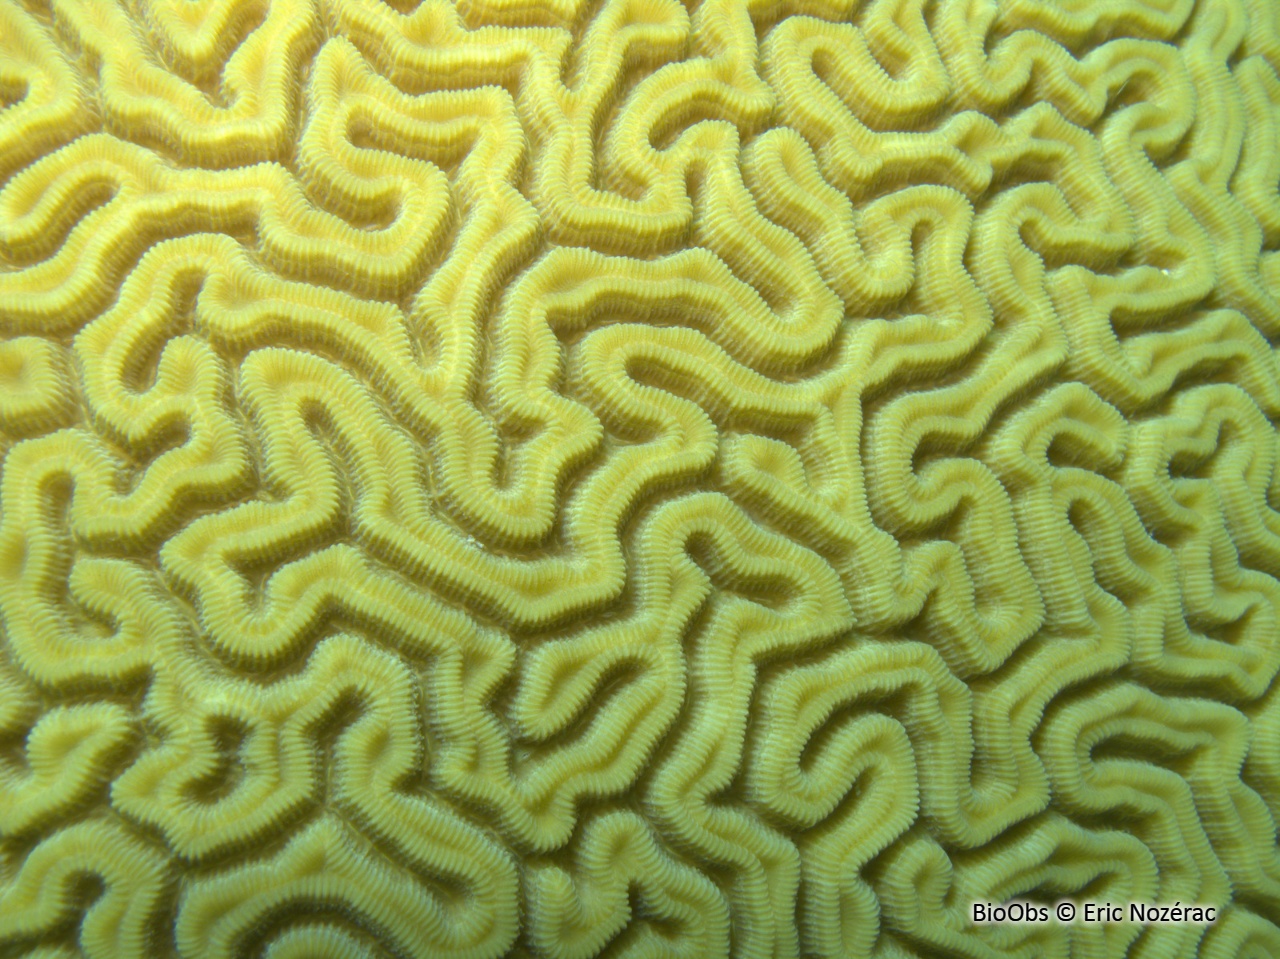 Corail cerveau - Diploria/ pseudodiploria sp. - Eric Nozérac - BioObs